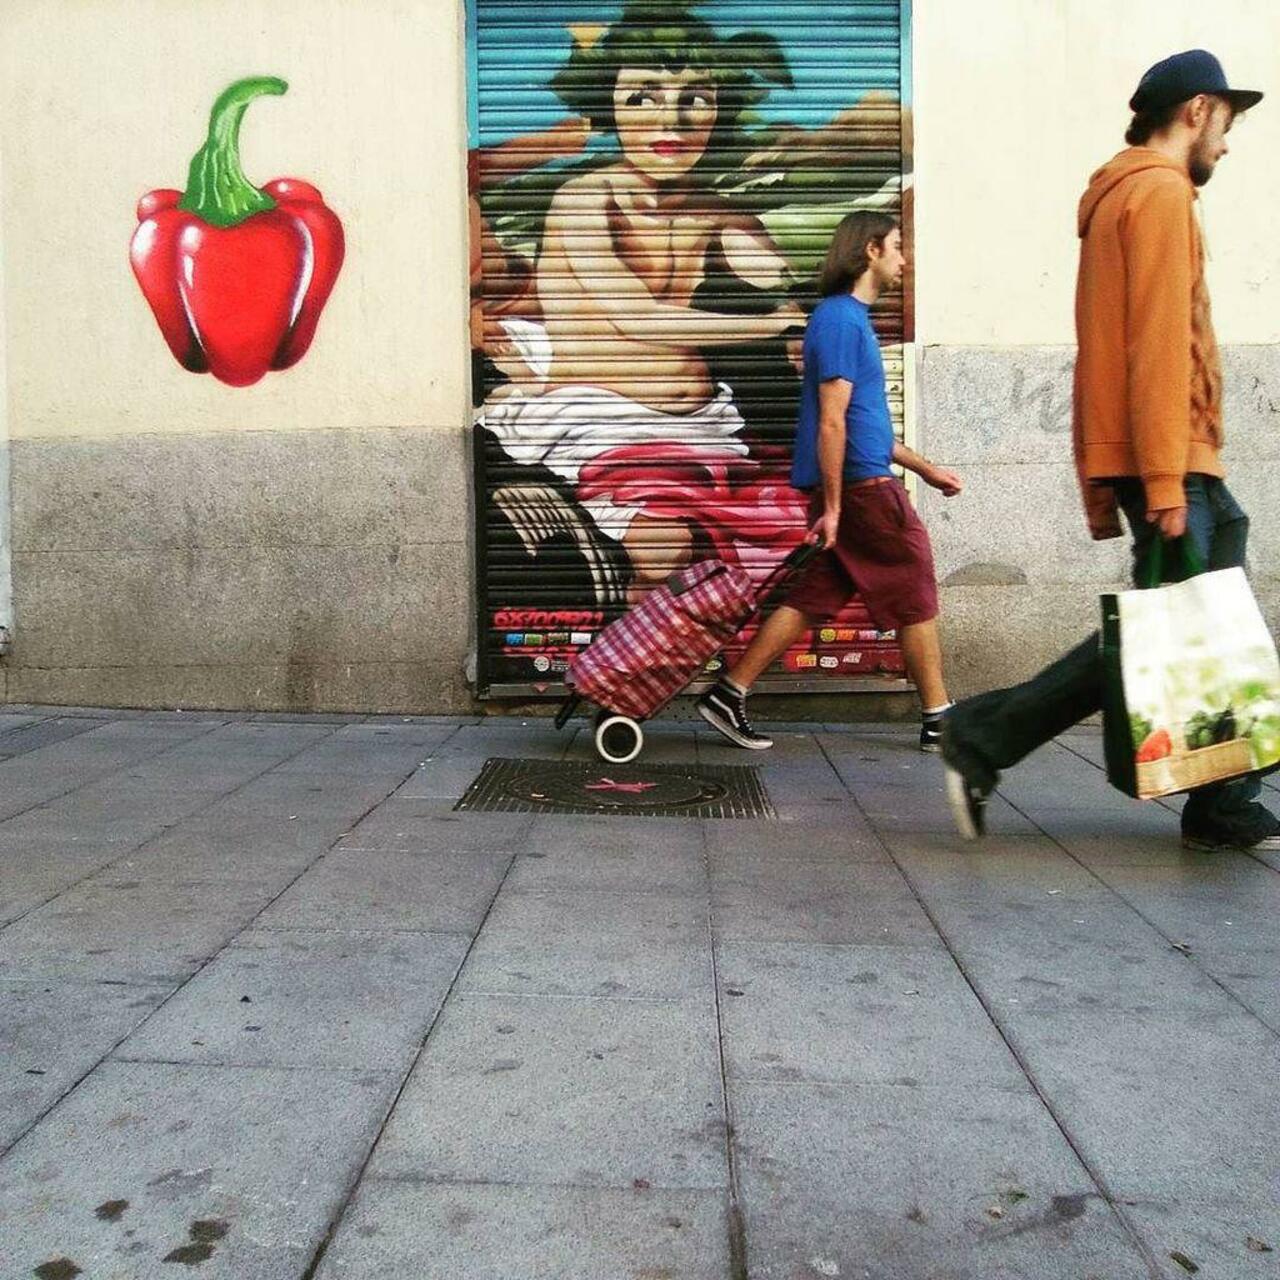 pimiento y cameo

@dingoperromudo #dingoperromudo #streetart #arteurbano #urbanart #graffiti #madridgraffiti #stree… http://t.co/92hcvJbrhb